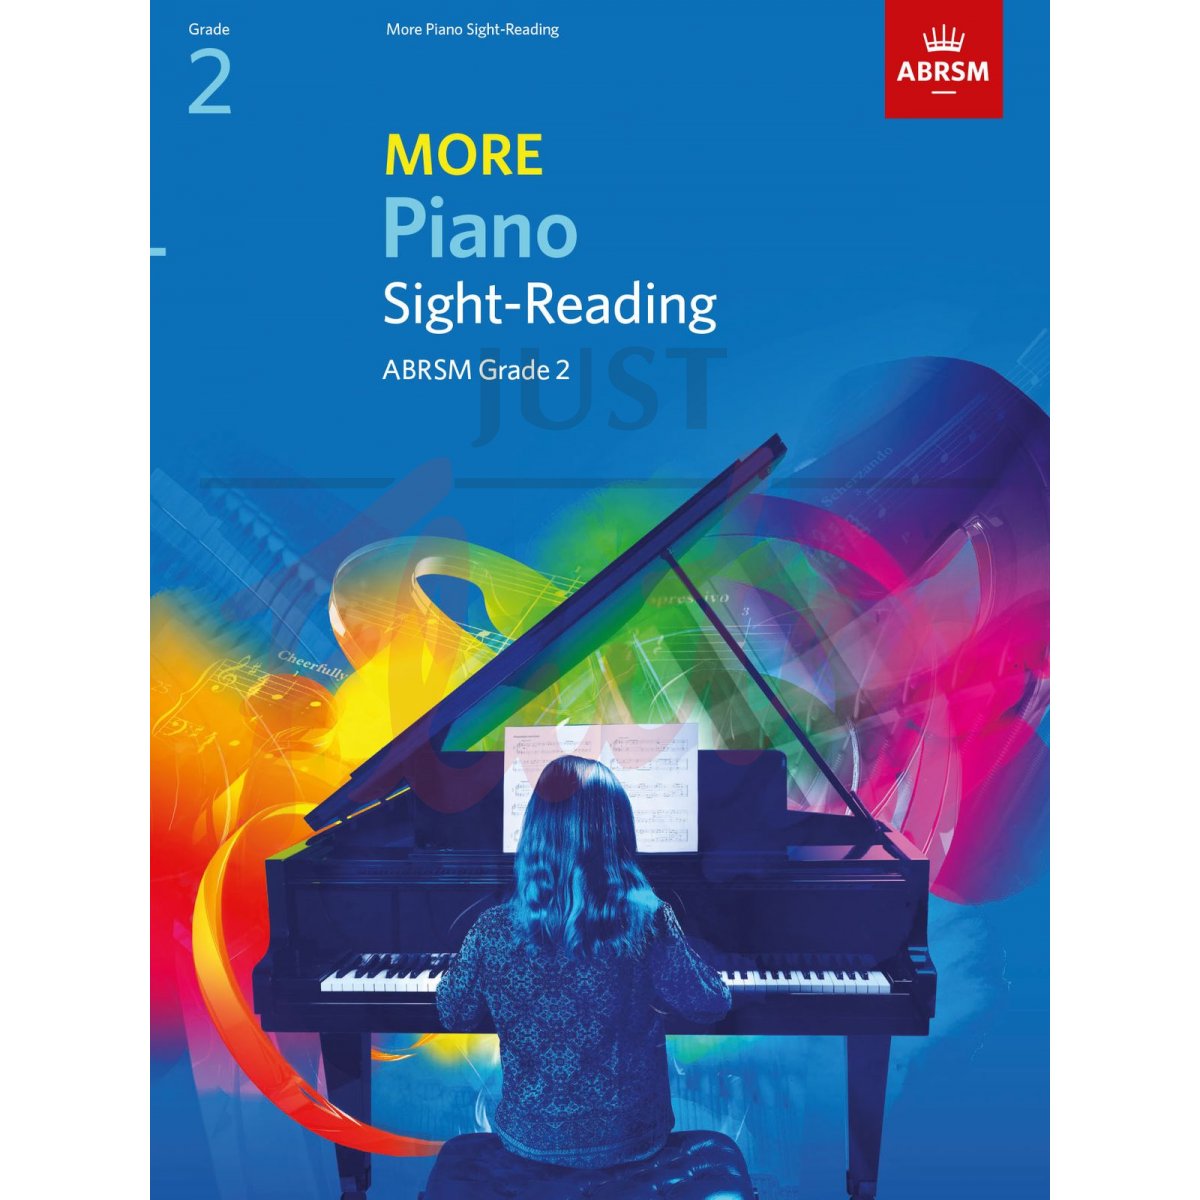 More Piano Sight-Reading Grade 2